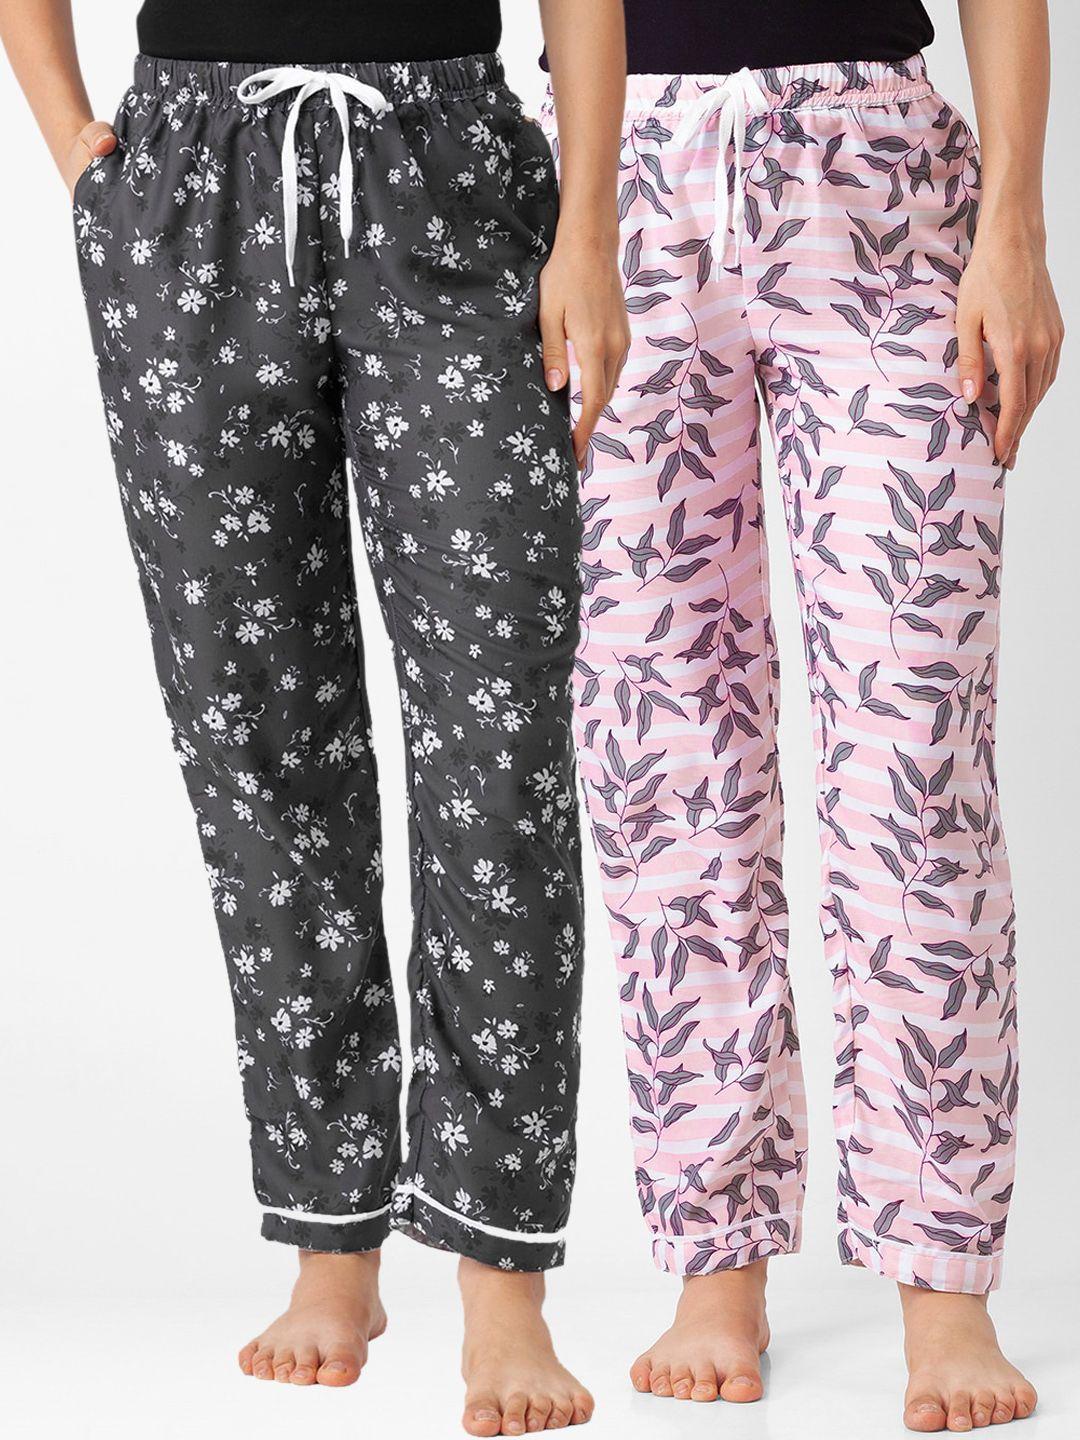 fashionrack-women-set-of-2-pink-&-black-floral-printed-cotton-pyjamas